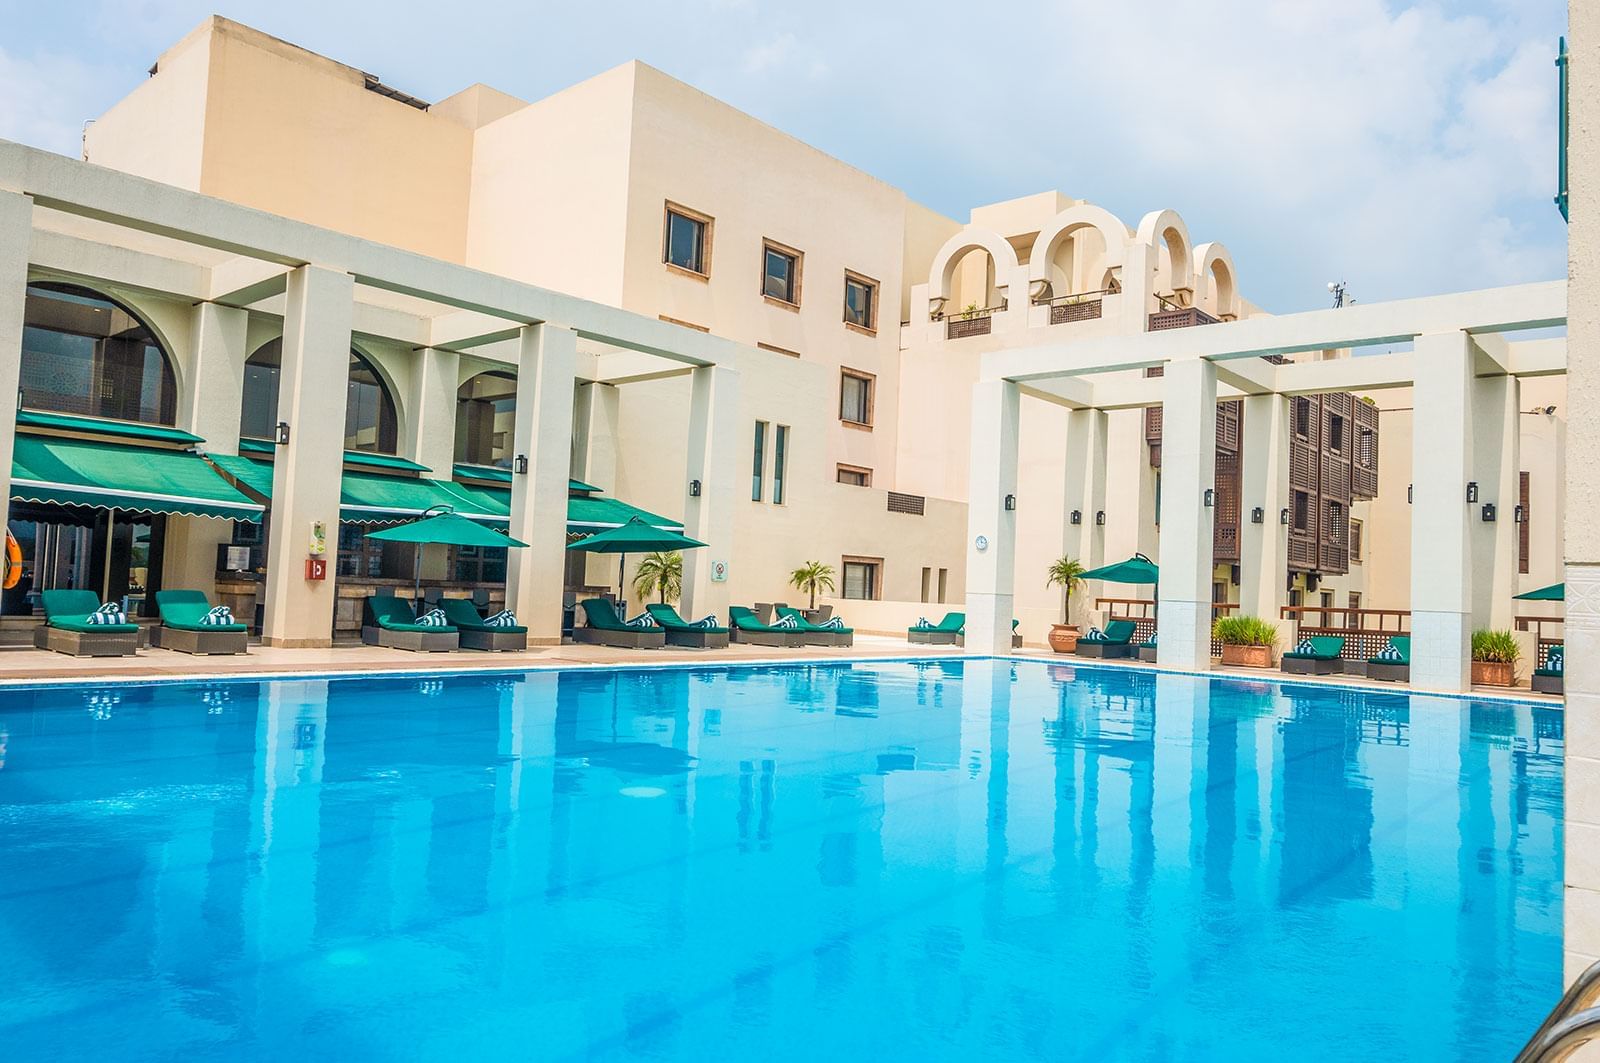 Islamabad Serena Hotel Best Hotels In Islamabad